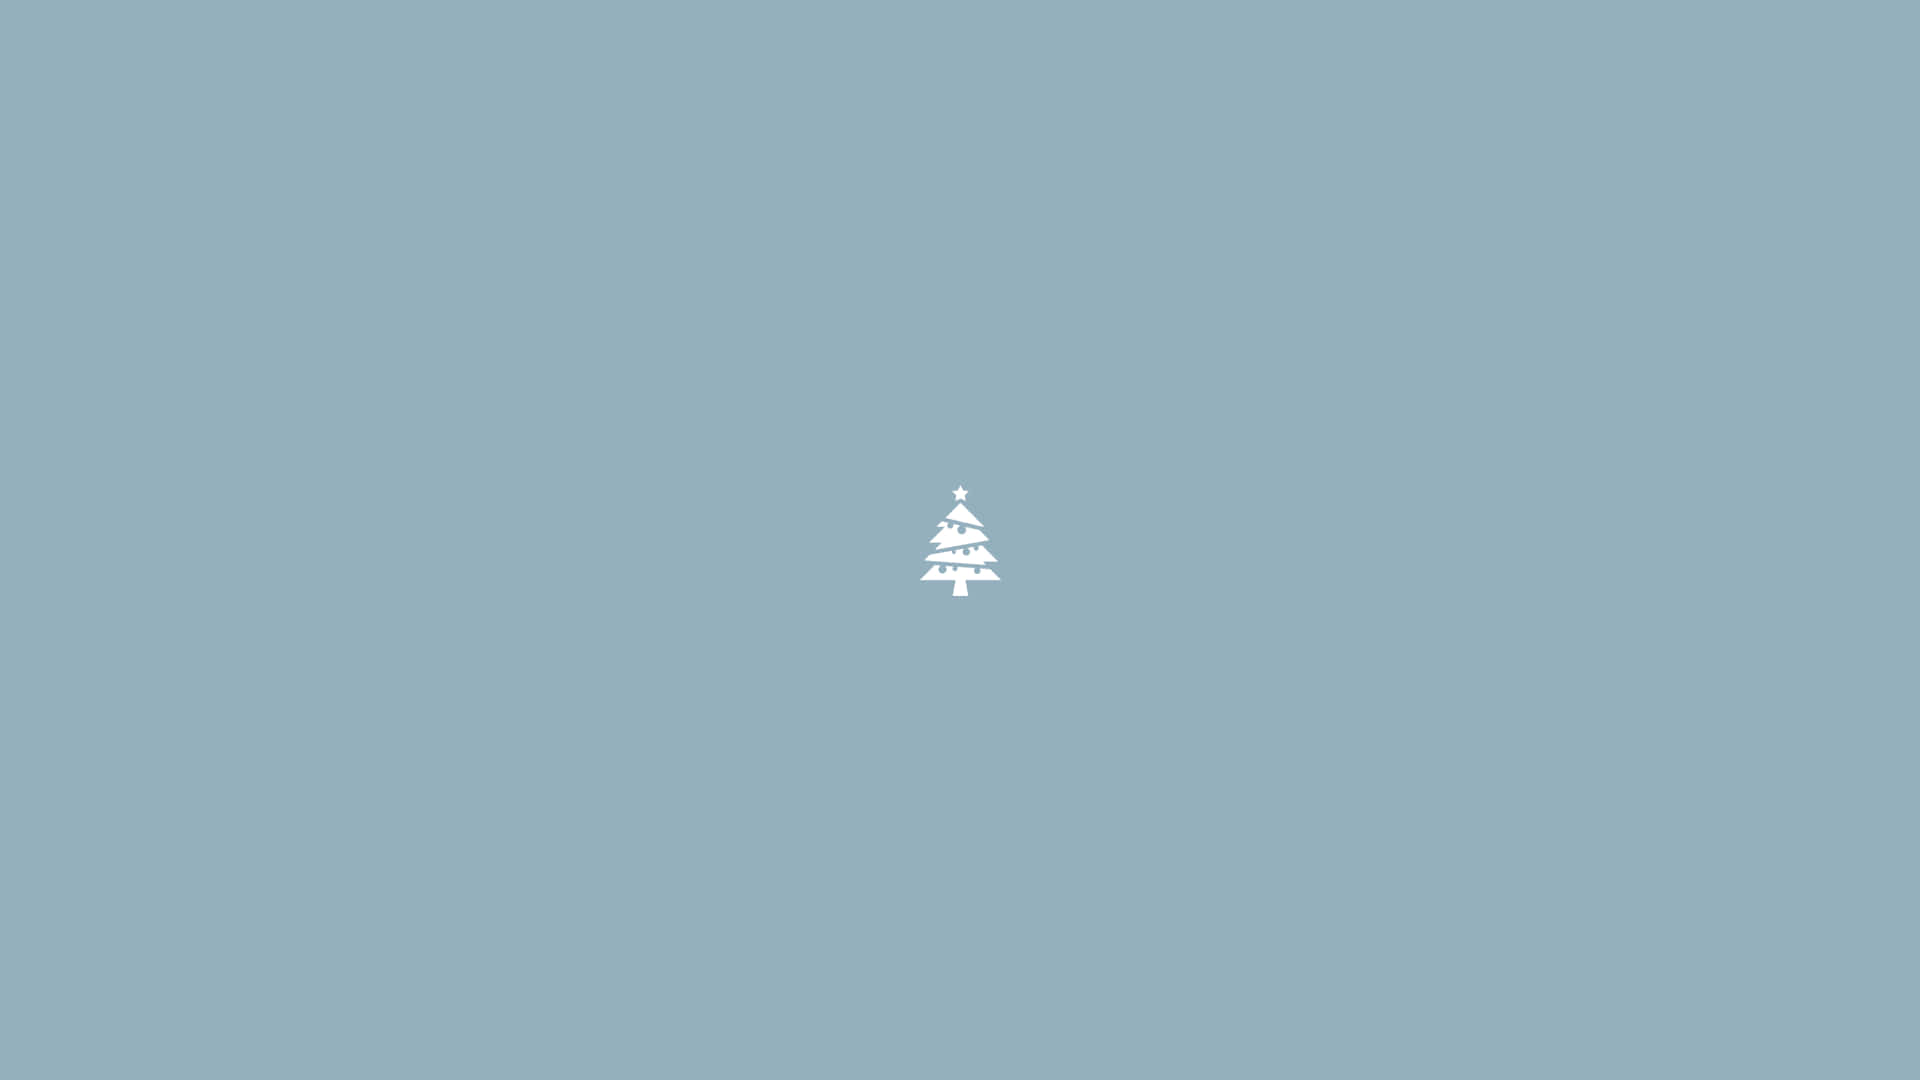 Single Simple Aesthetic Cute Christmas Tree Wallpaper